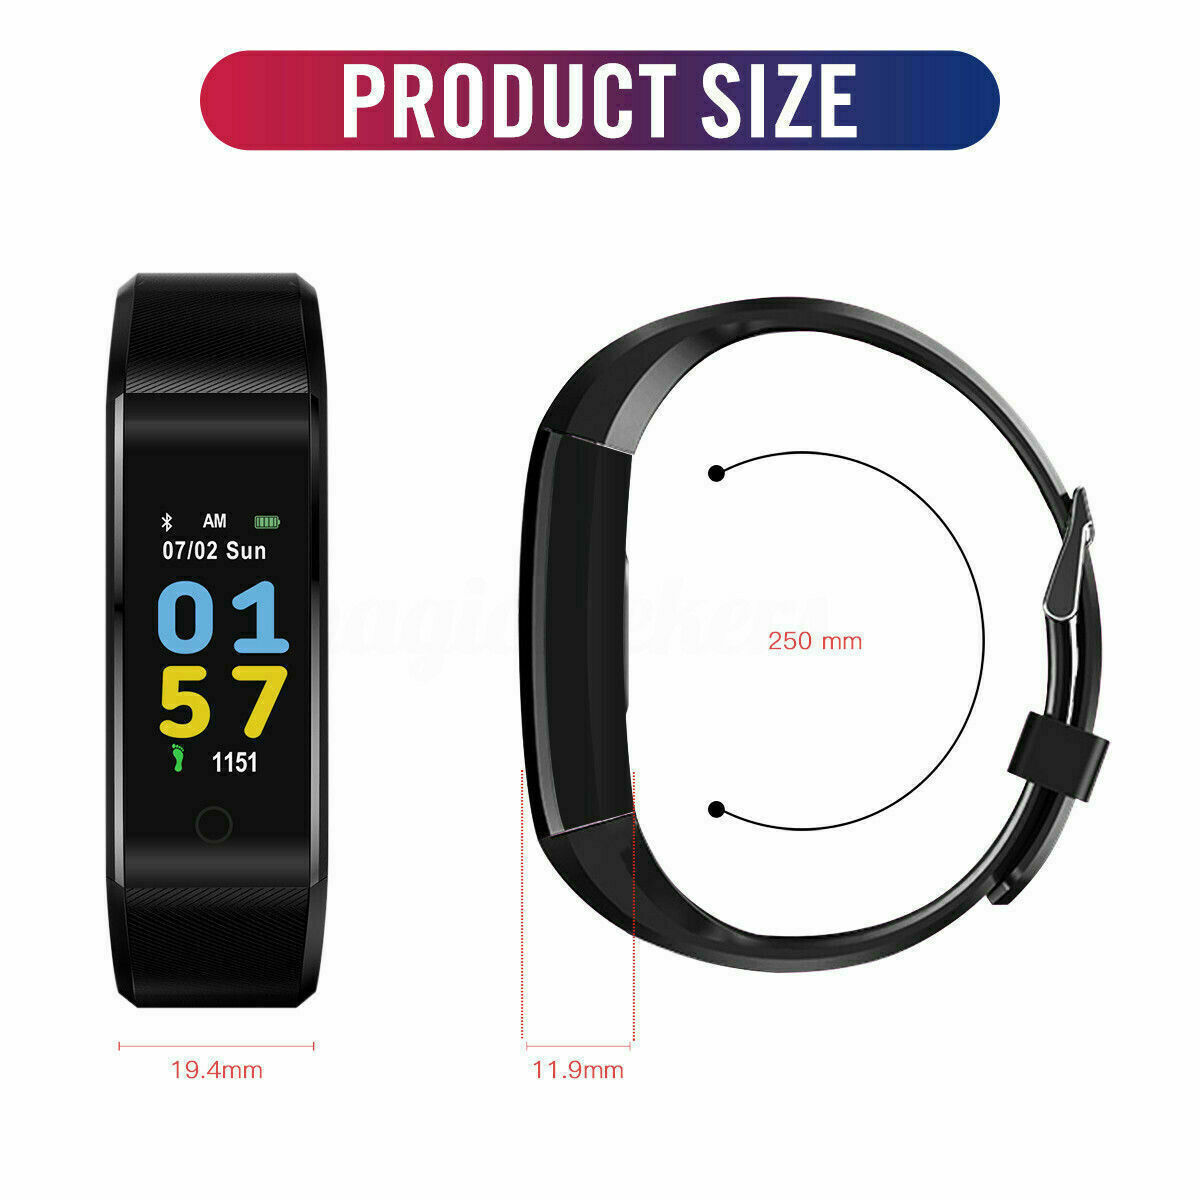  new commodity *Bluetooth* multifunction smart watch black black Smart bracele iPhone Android correspondence Bluetooth sport watch 